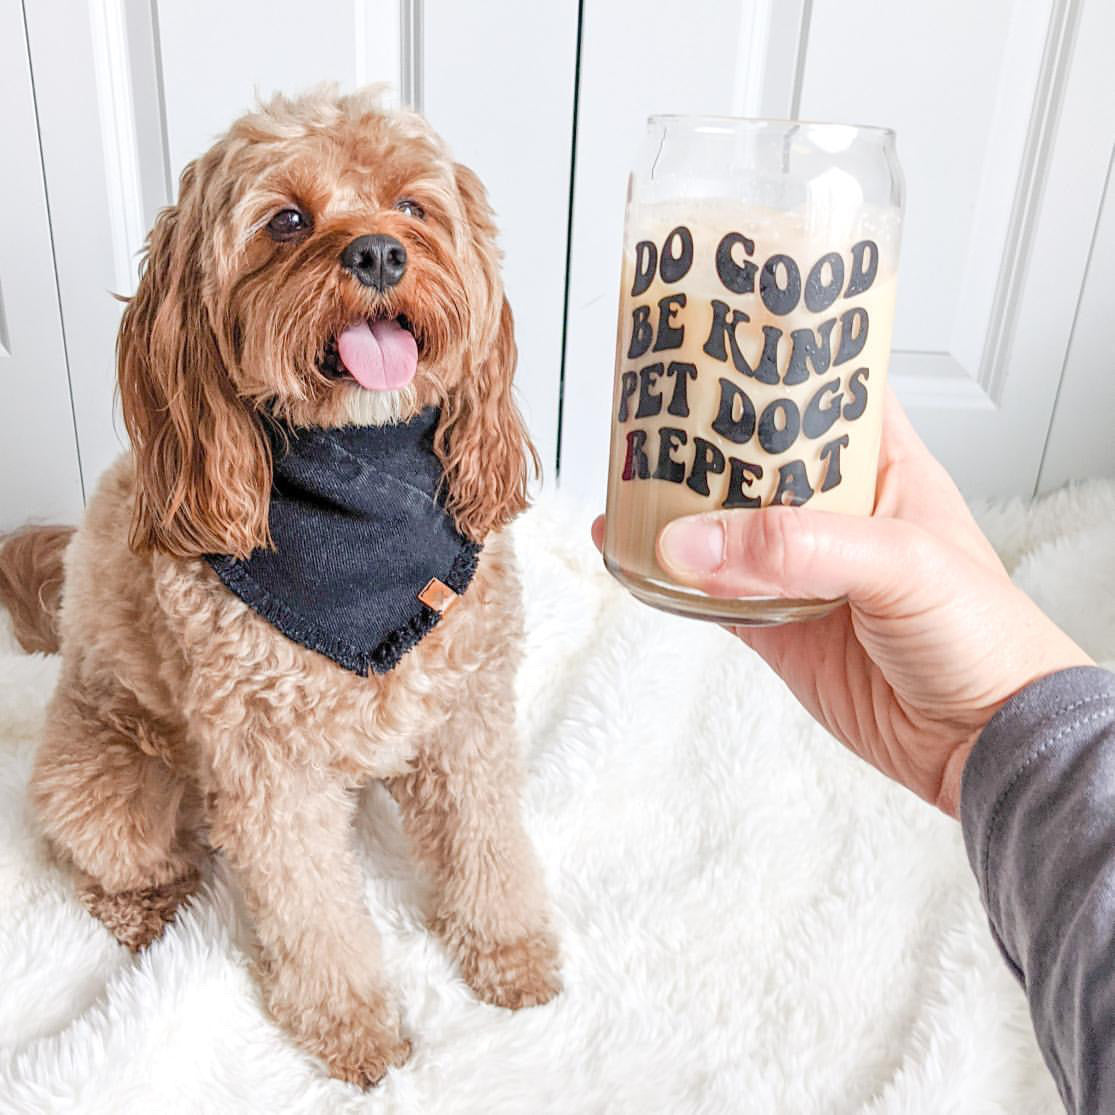 DO GOOD PET DOGS GLASS